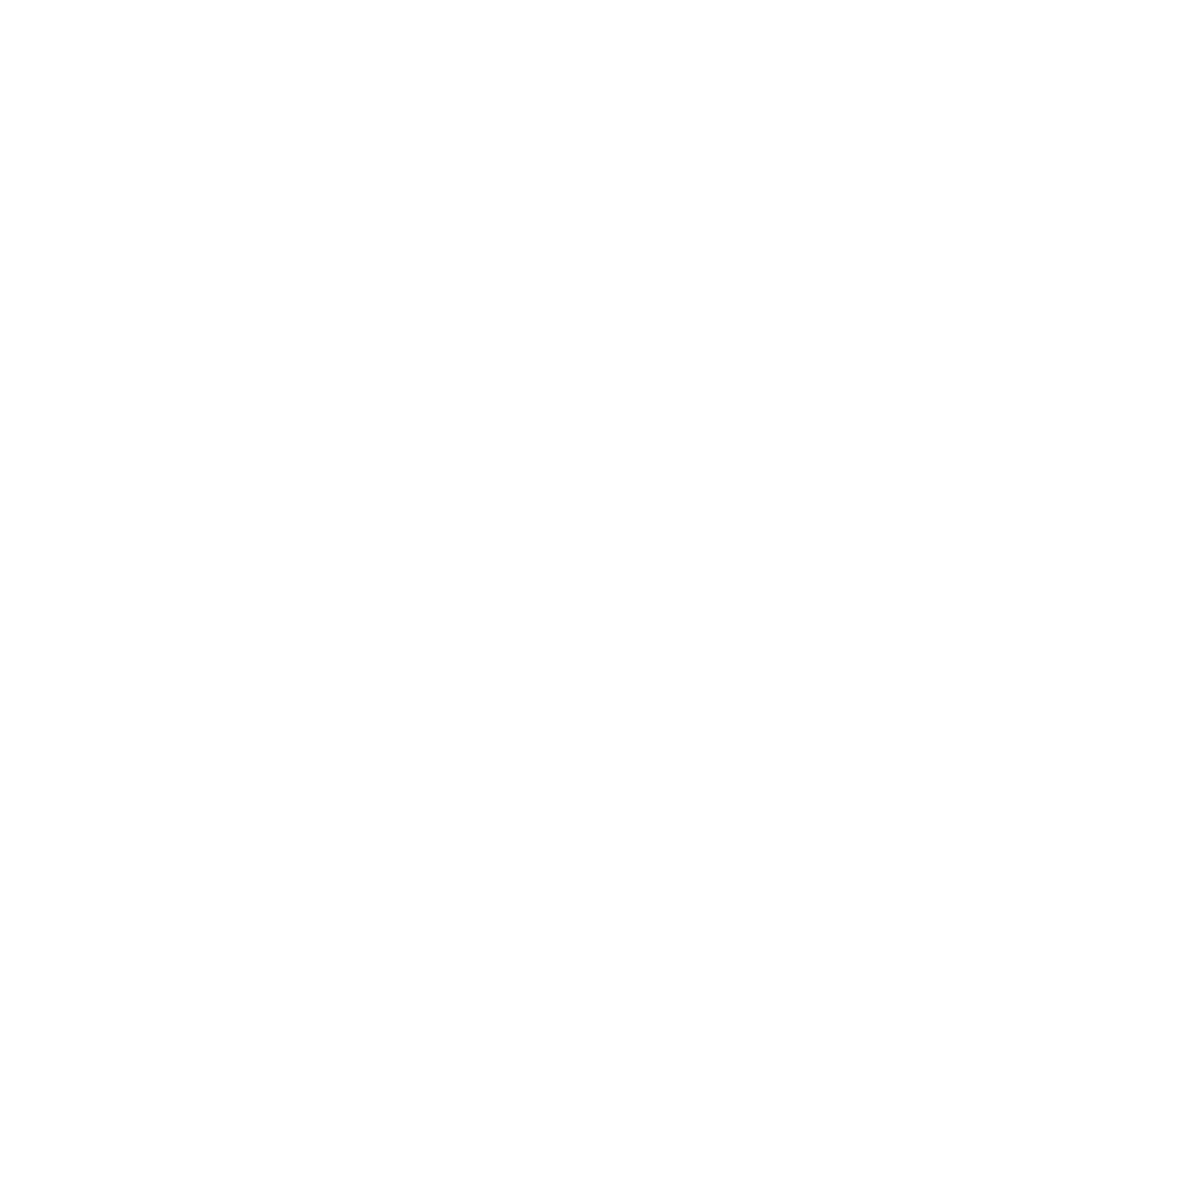 Vanessa's specialty coffees